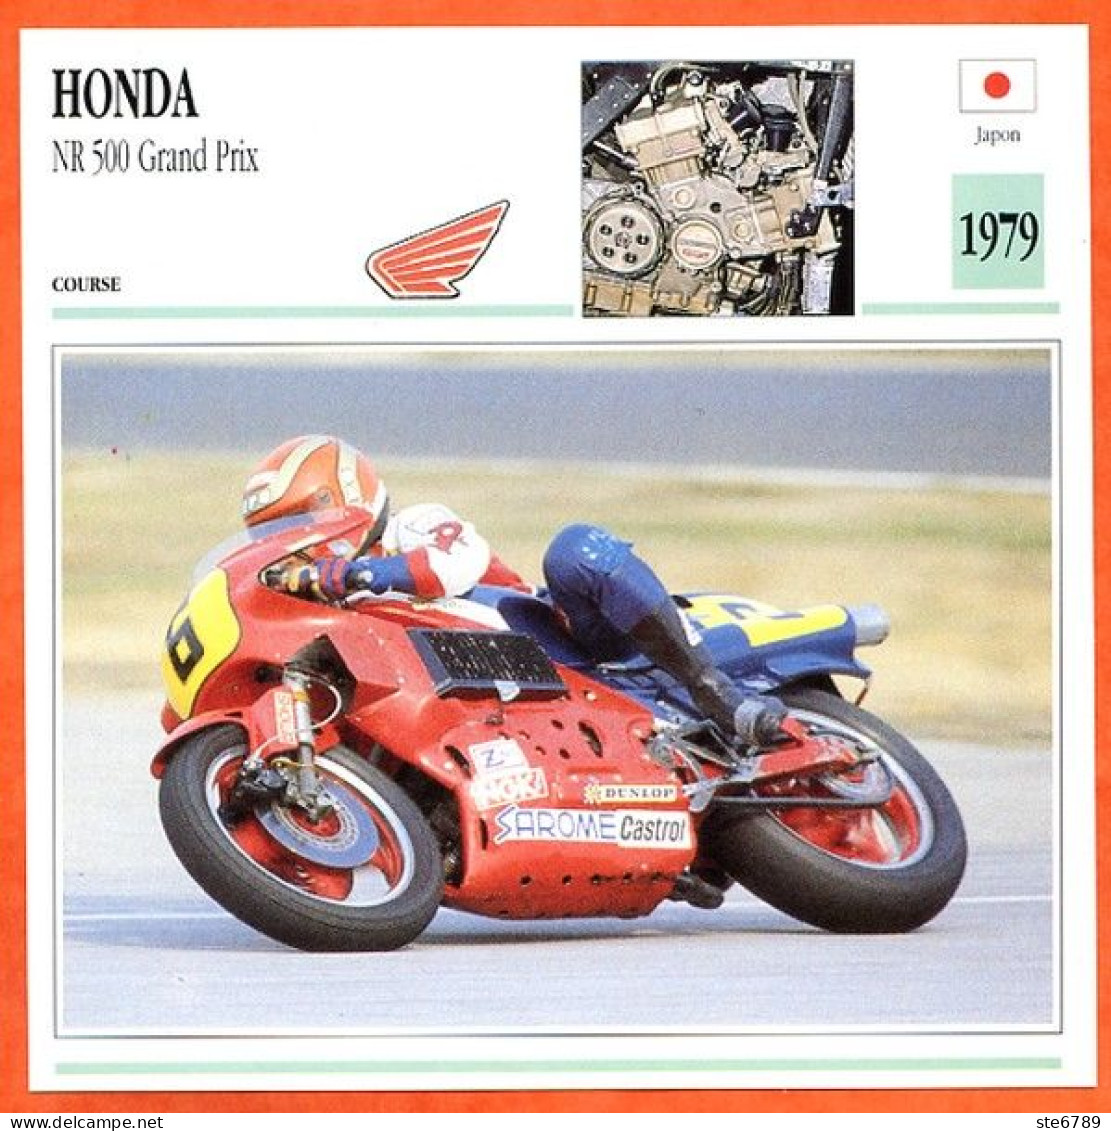 HONDA NR 500 Grand Prix 1979 Japon Fiche Technique Moto - Sports